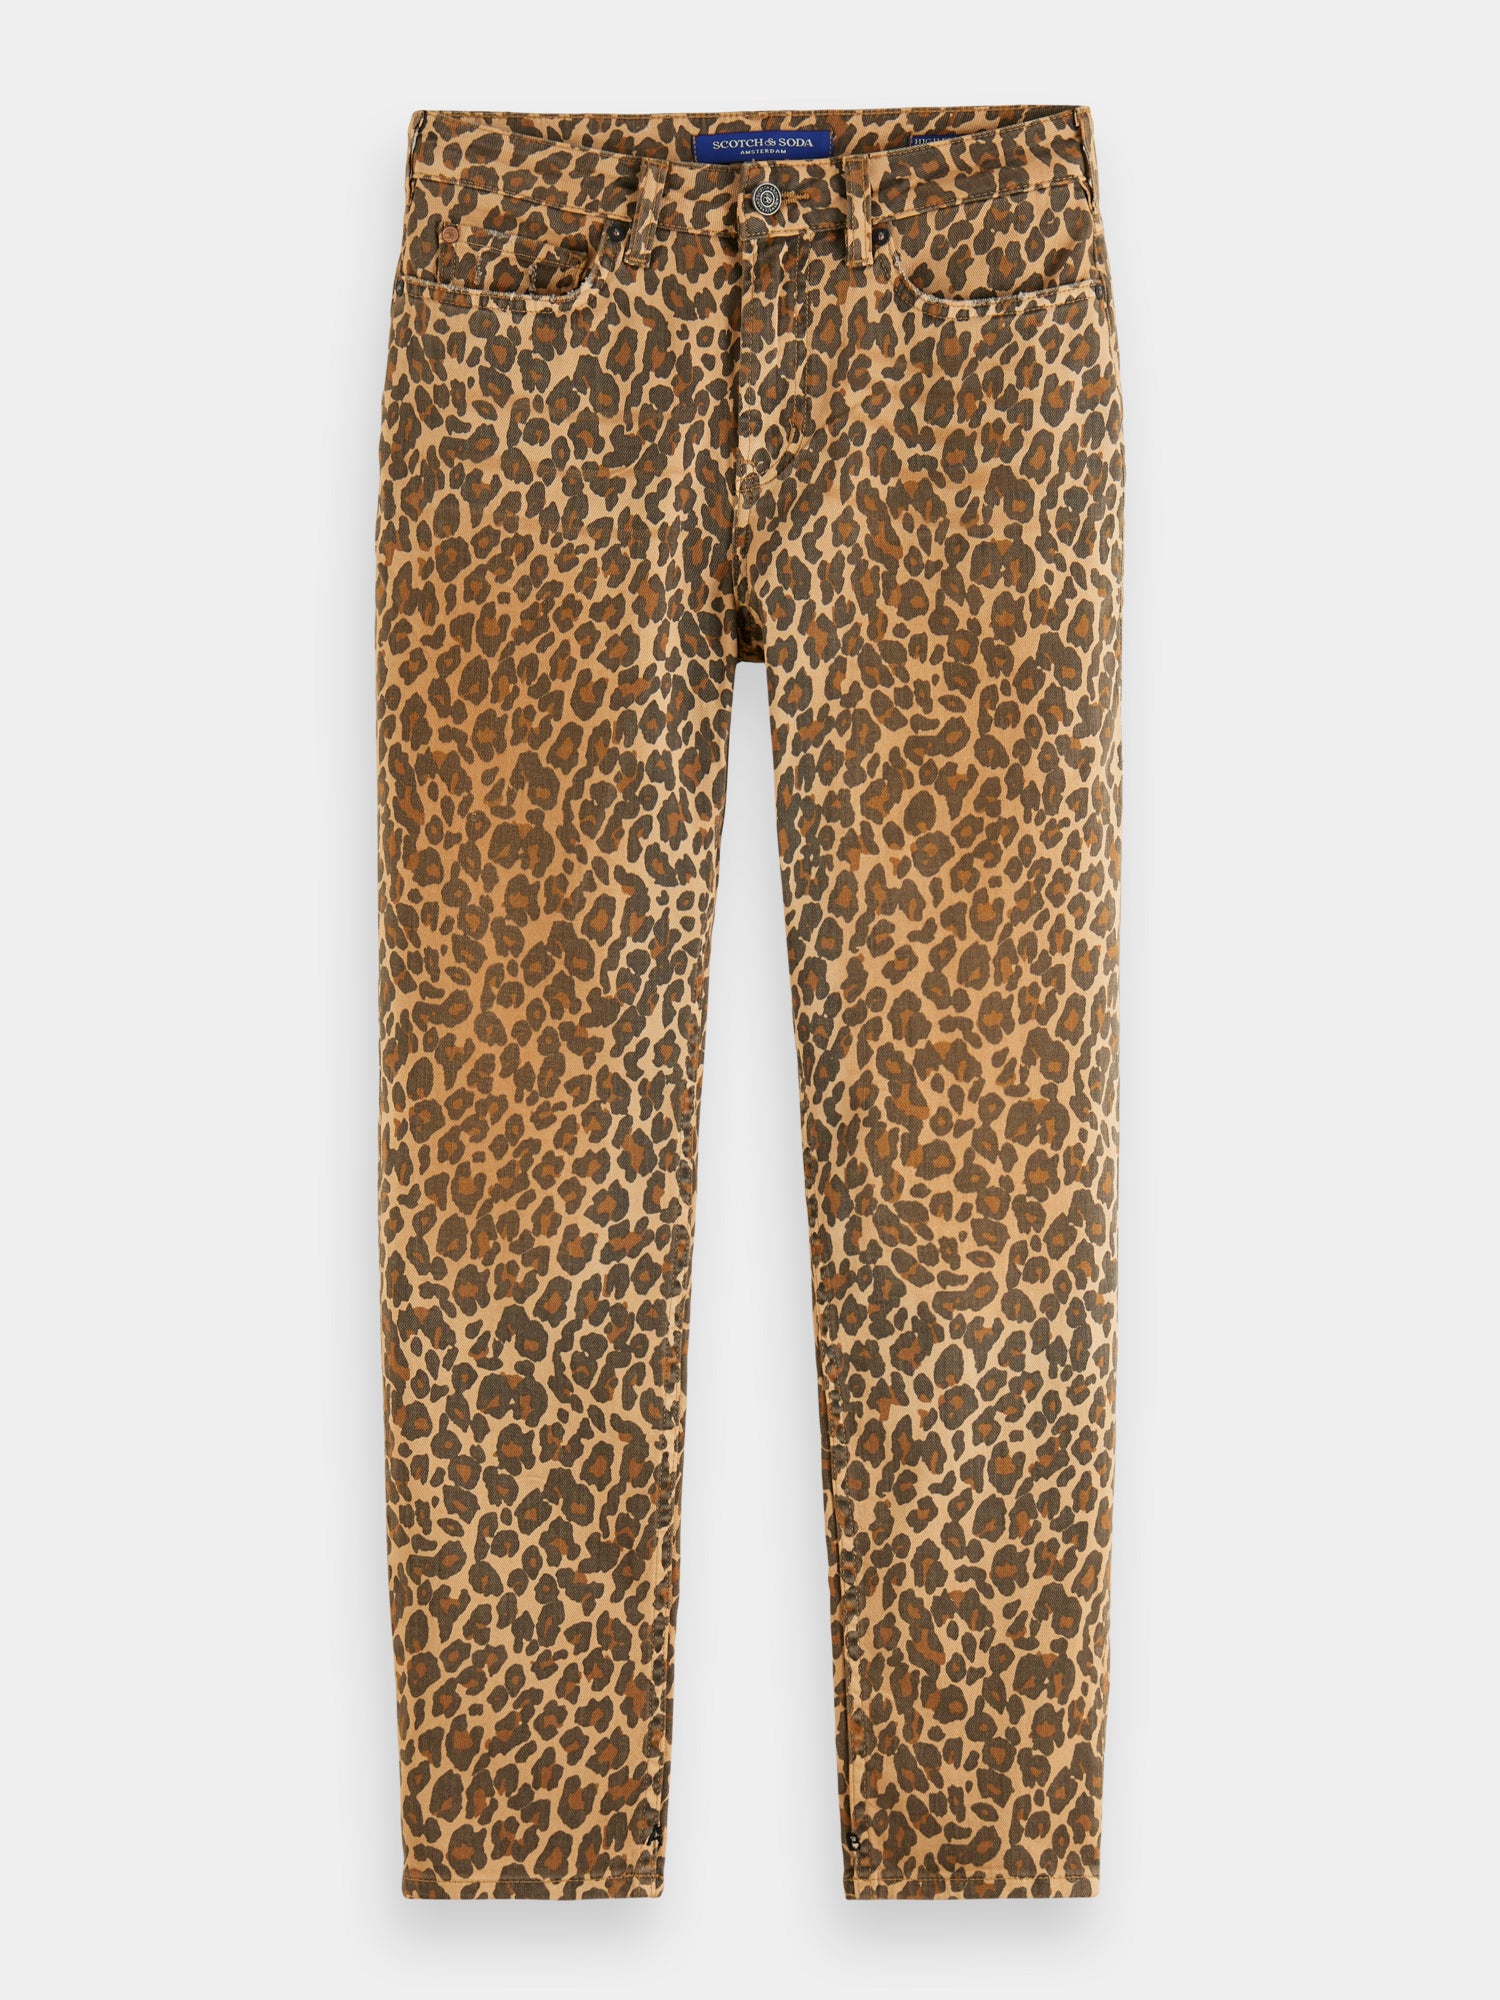 Zara, Jeans, Zara Trf Button Fly Leopard Jeans Size Size 2